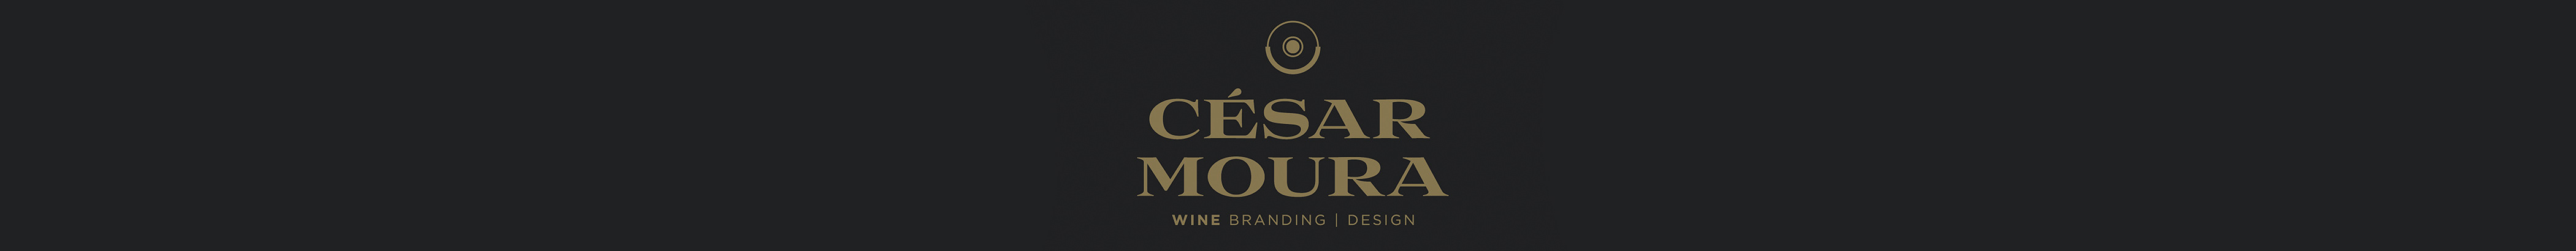 César Moura's profile banner